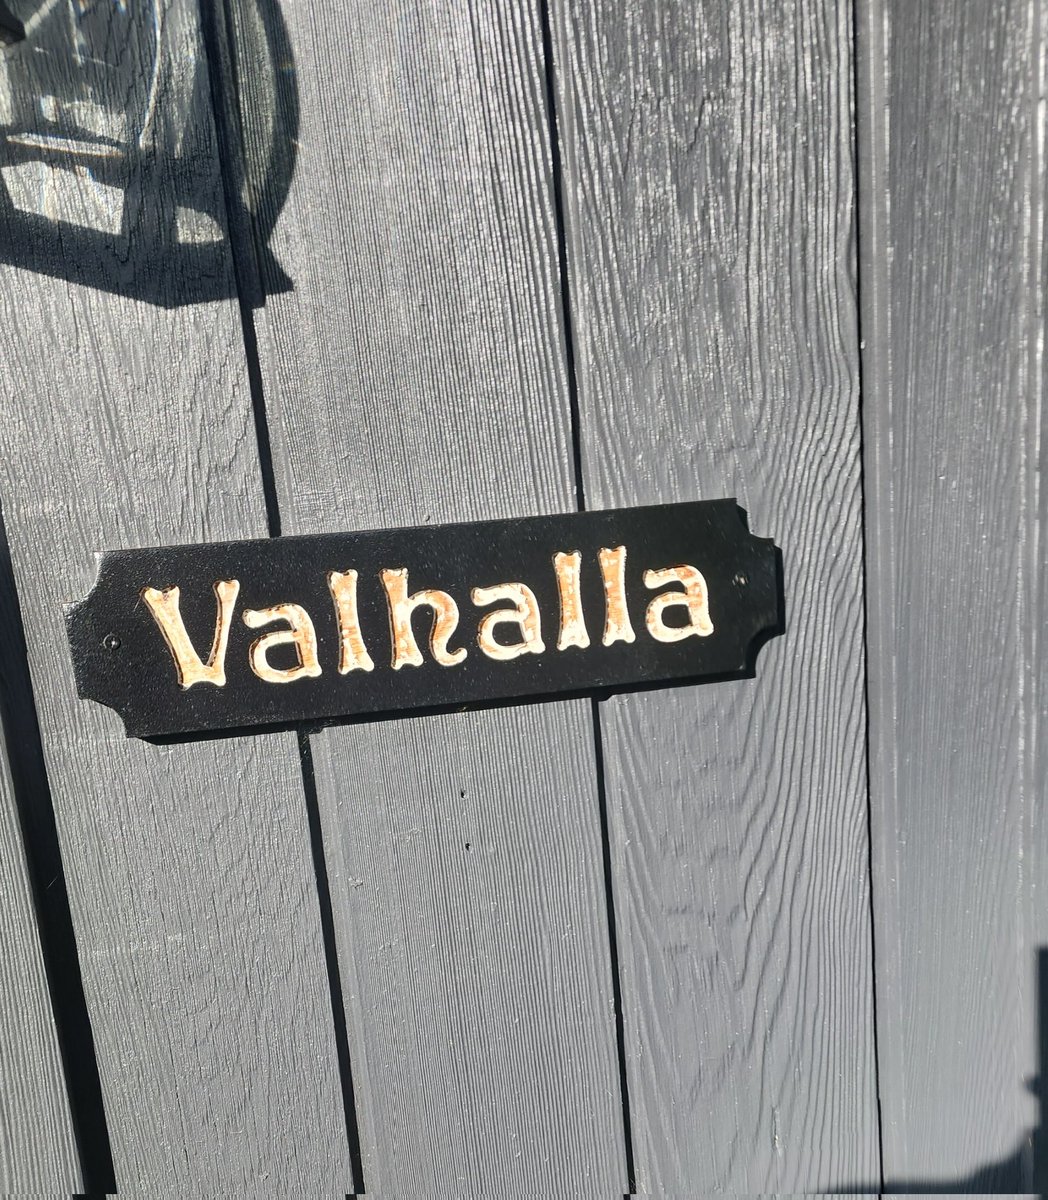 Made it to Valhalla.